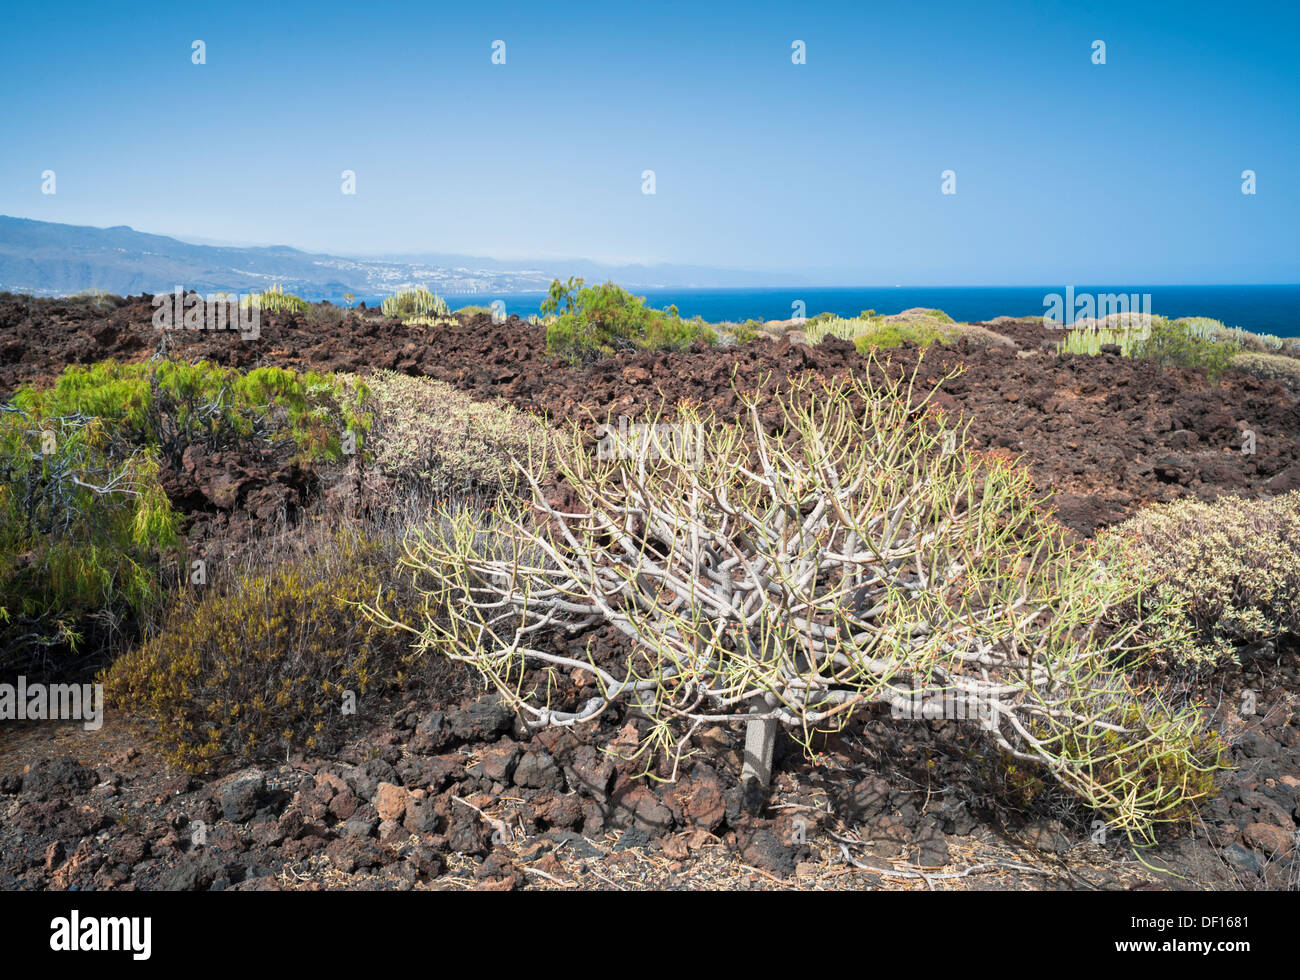 Euphorbia balsamifera, Plocama pendula and Campylanthus salasoides on lava beside the  ocean at Malpais de Guimar, Tenerife Stock Photo